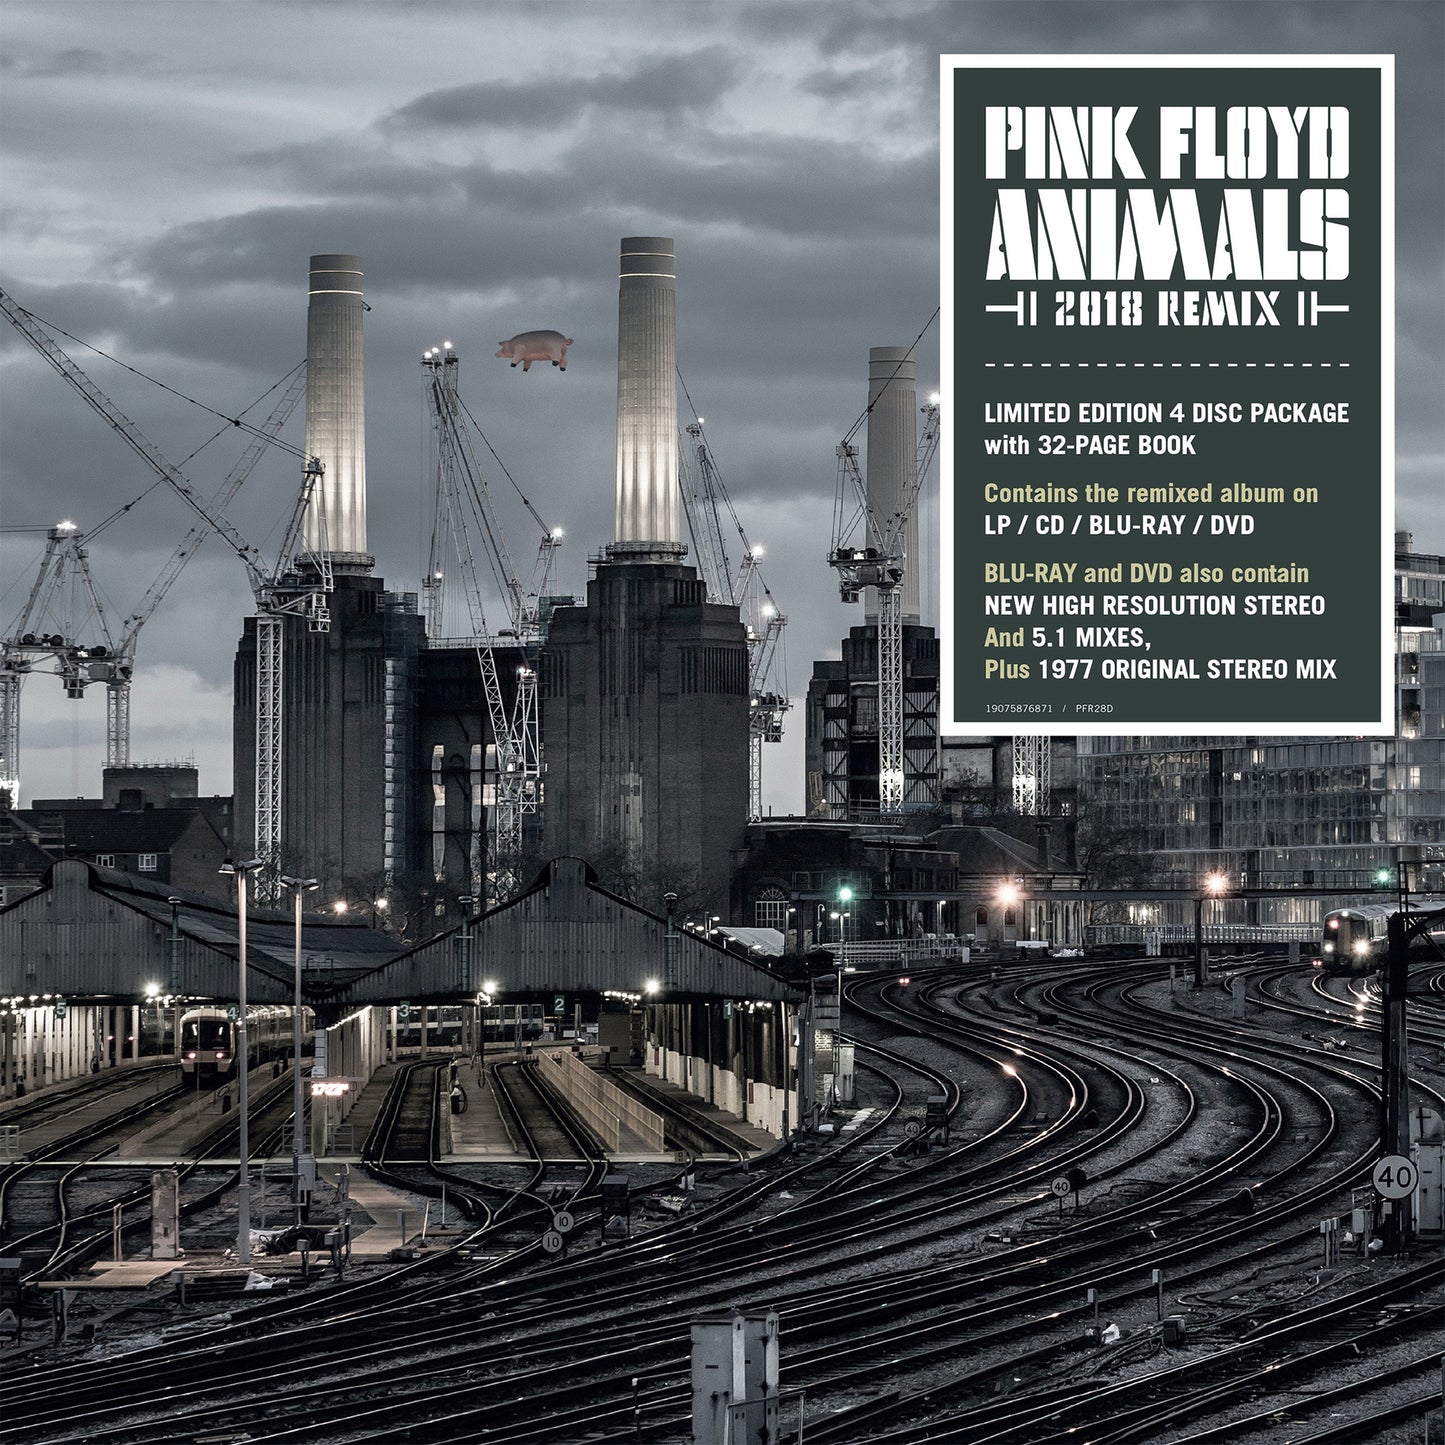 Pink Floyd - Animals (2018 Remix) LP, CD, DVD Audio Disc y Blu-Ray Box Set